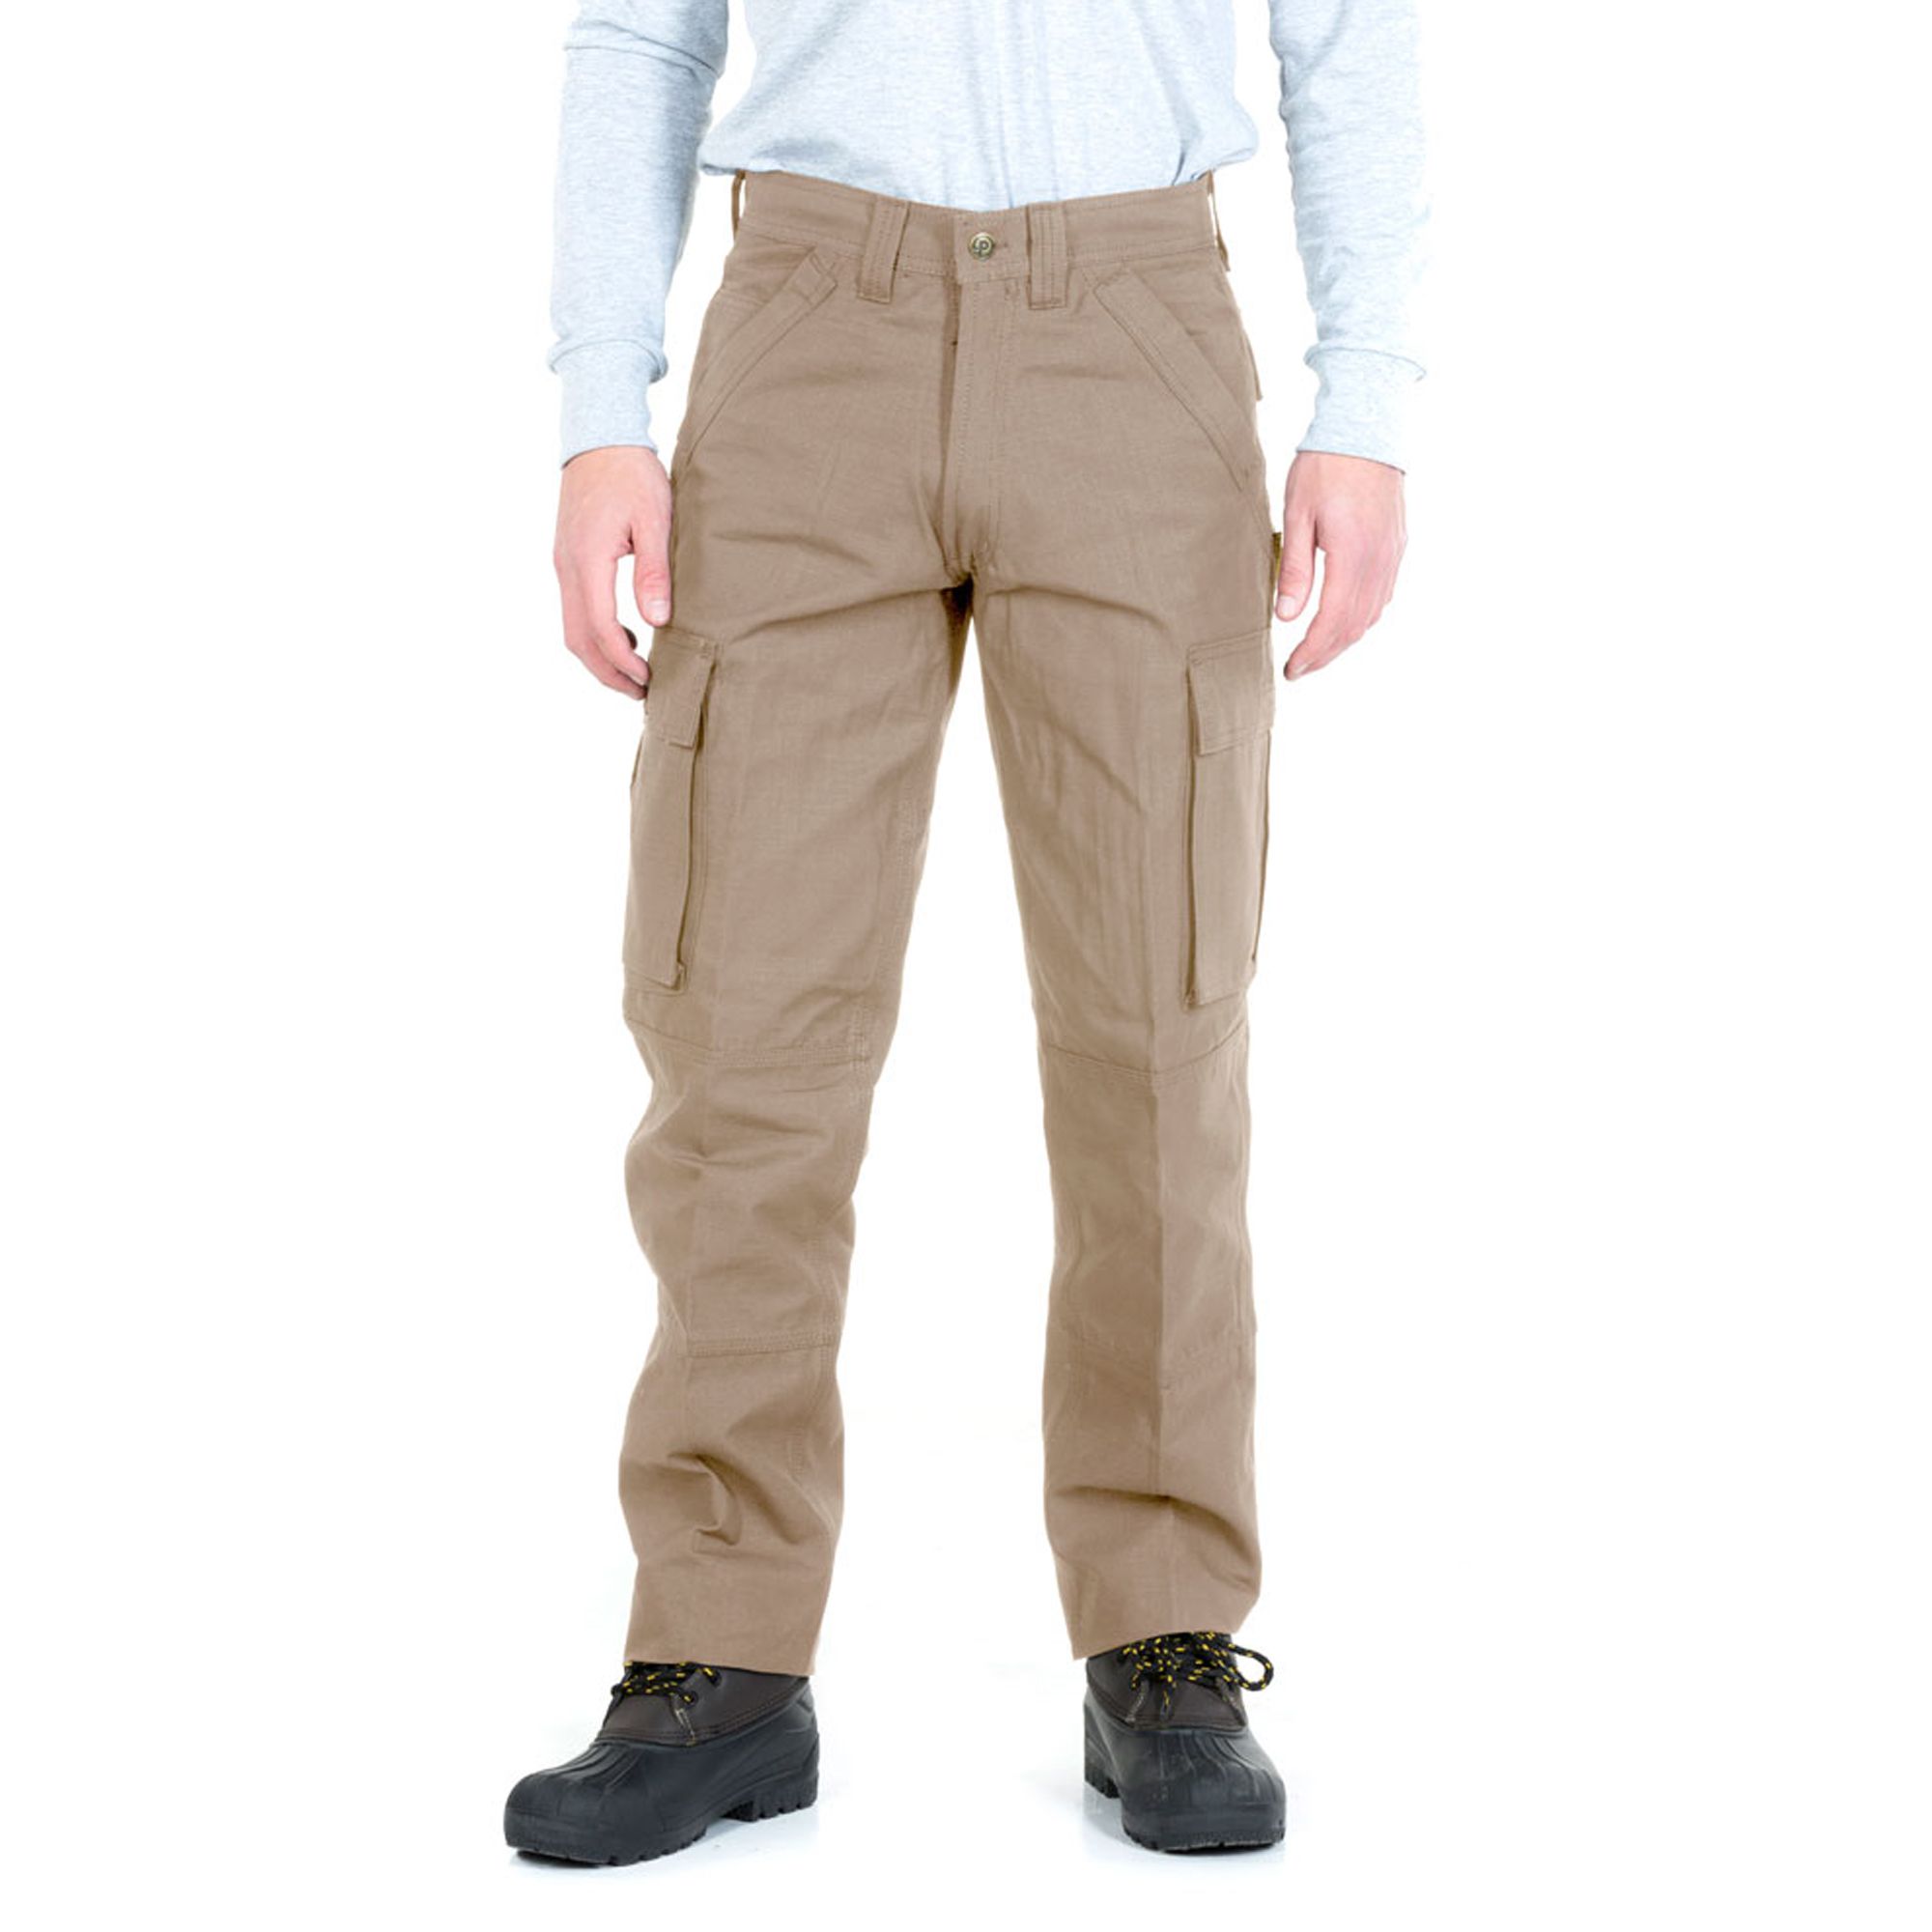 Pantalon cargol Ripstop Antidesgarro – Beige – So&Mat – Seguridad Industrial